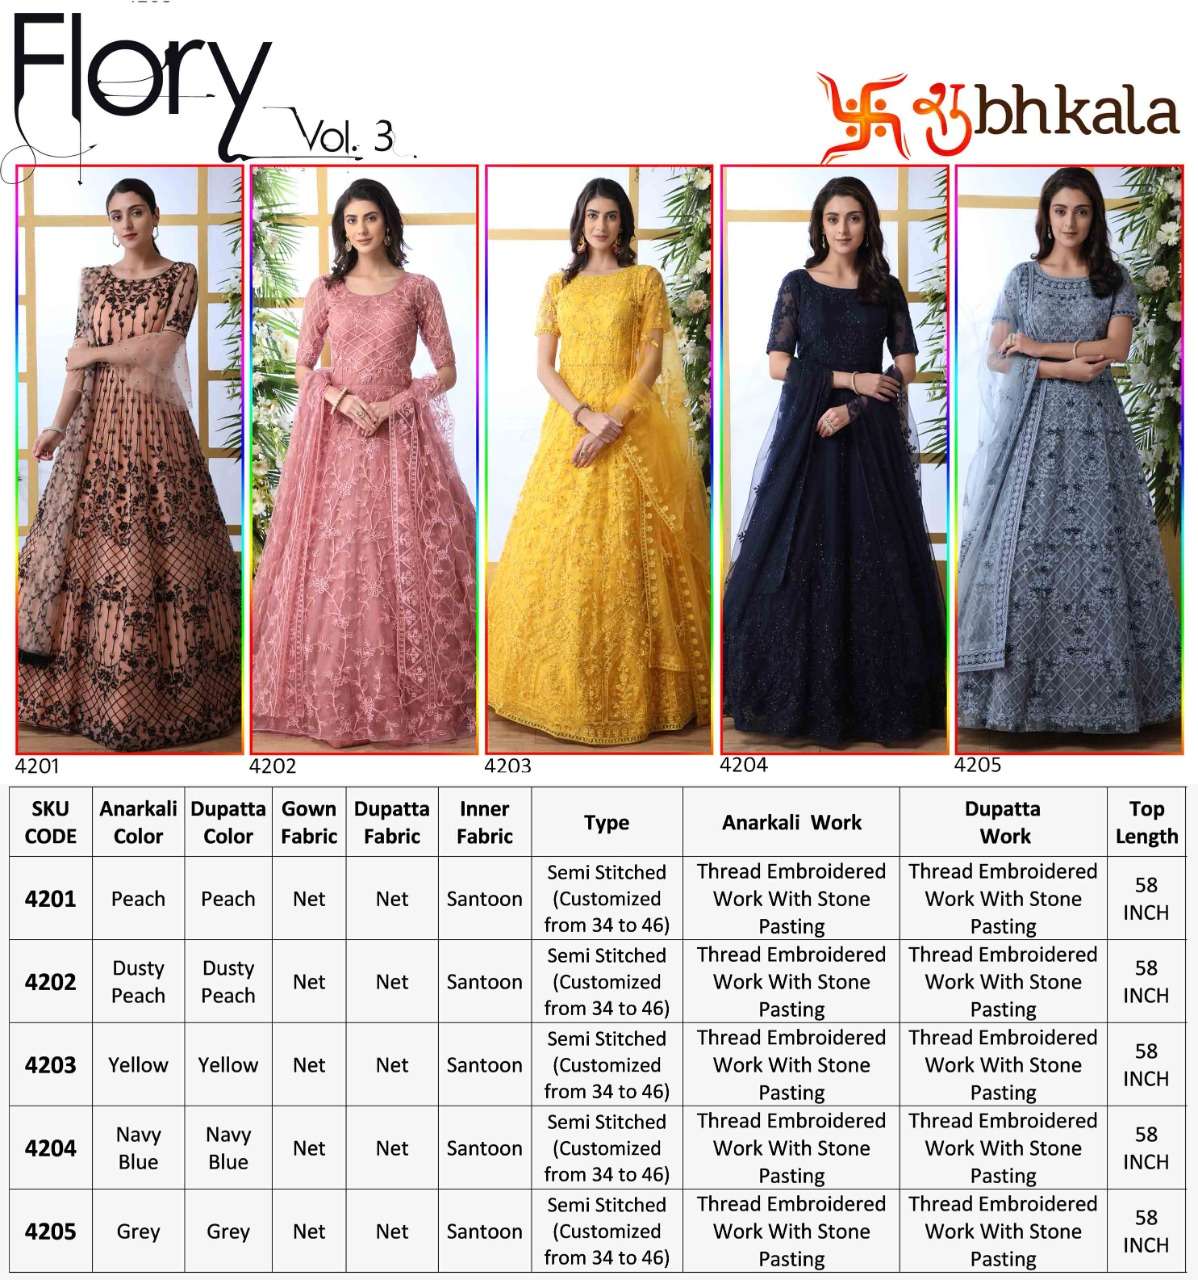 Shubhkala Flory Vol 3 Catalog Designer Bridal Long Gown